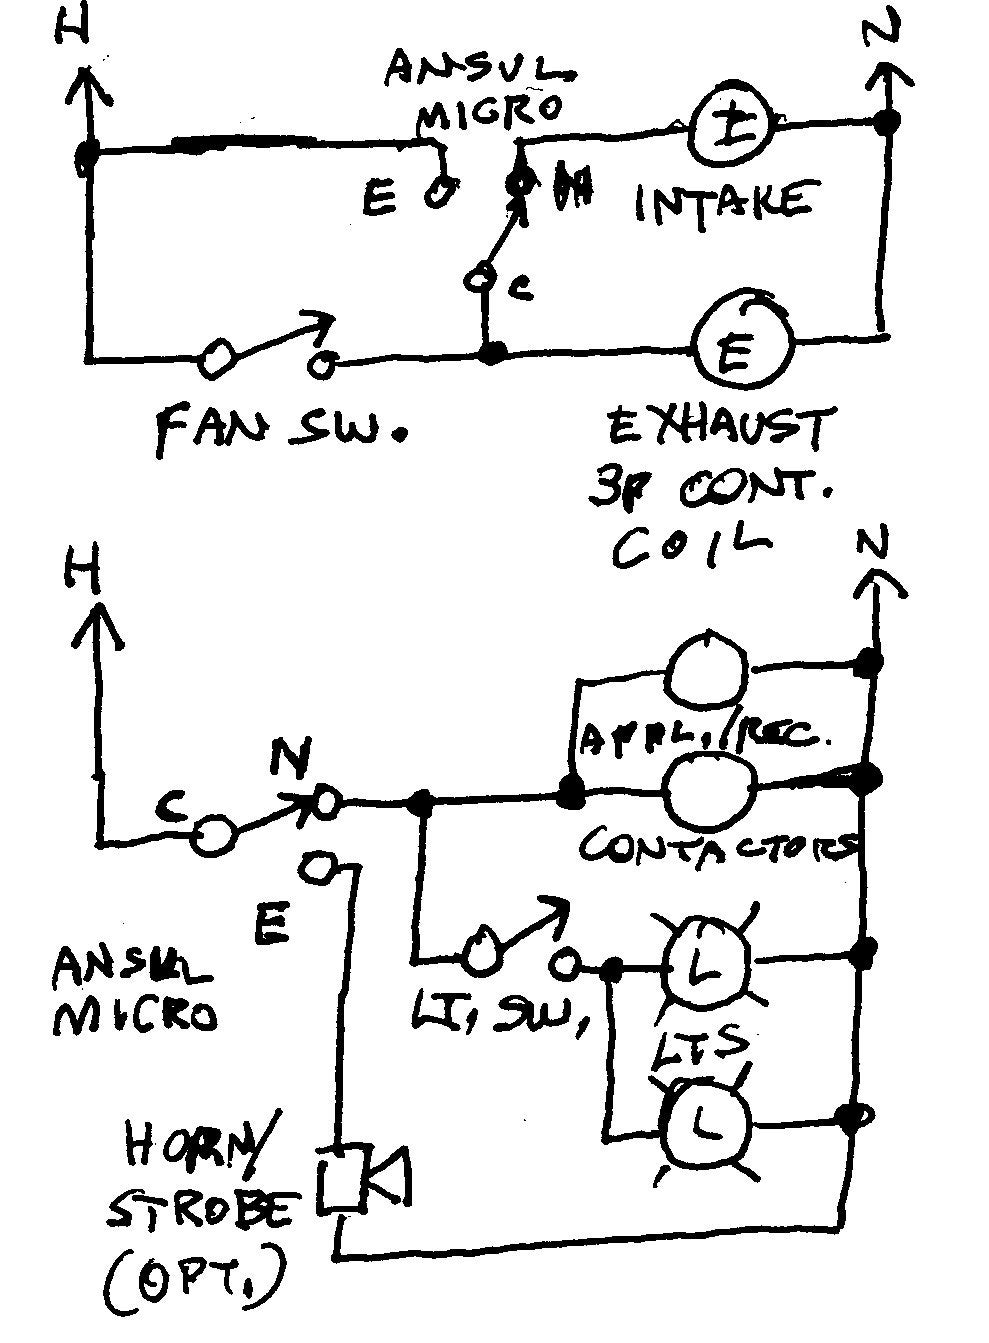 square d shunt trip breaker wiring diagram